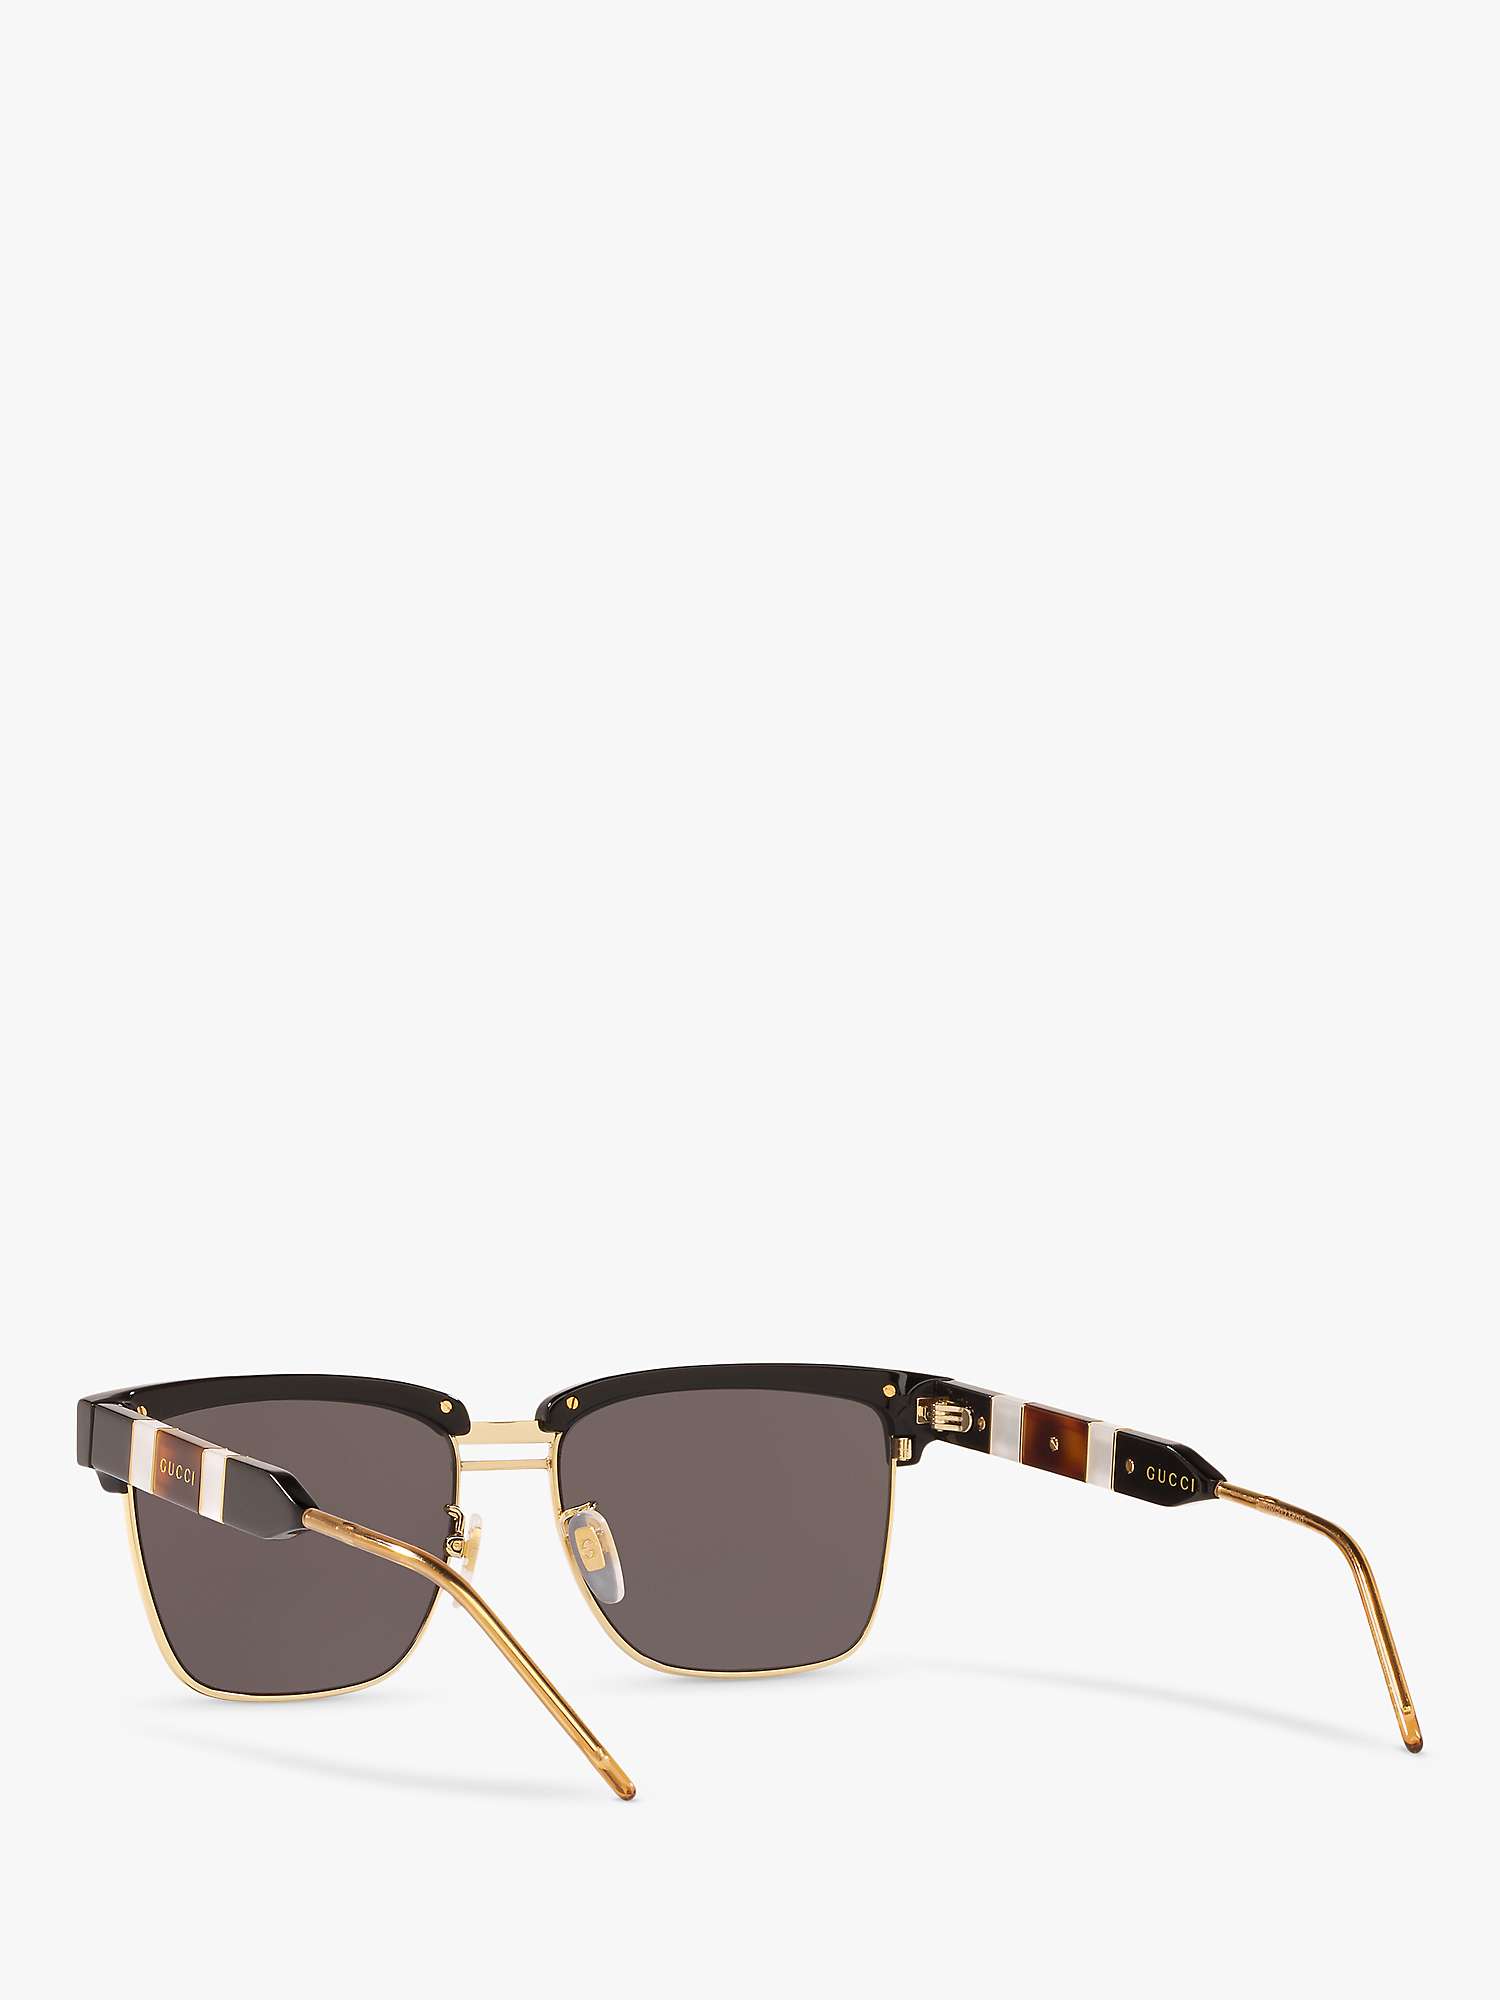 Buy Gucci GG0603S Men's Rectangular Sunglasses Online at johnlewis.com